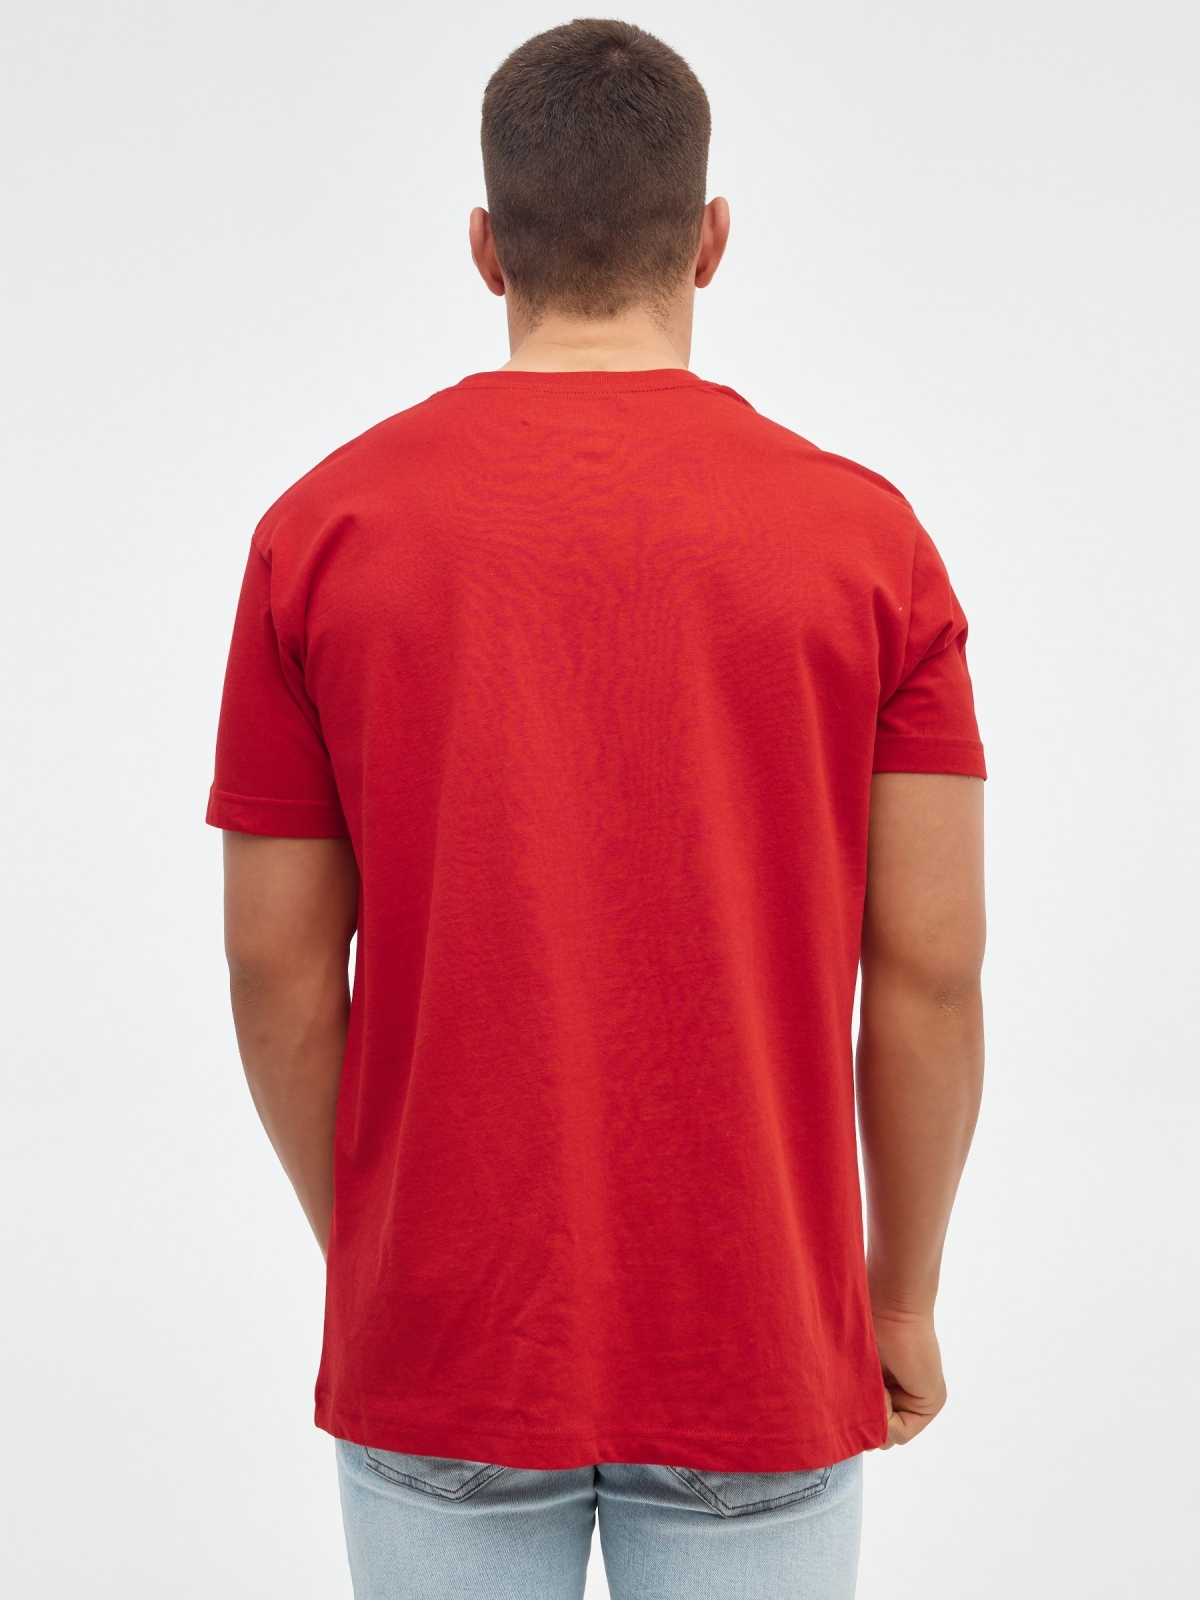 Camiseta básica manga corta rojo vista media trasera